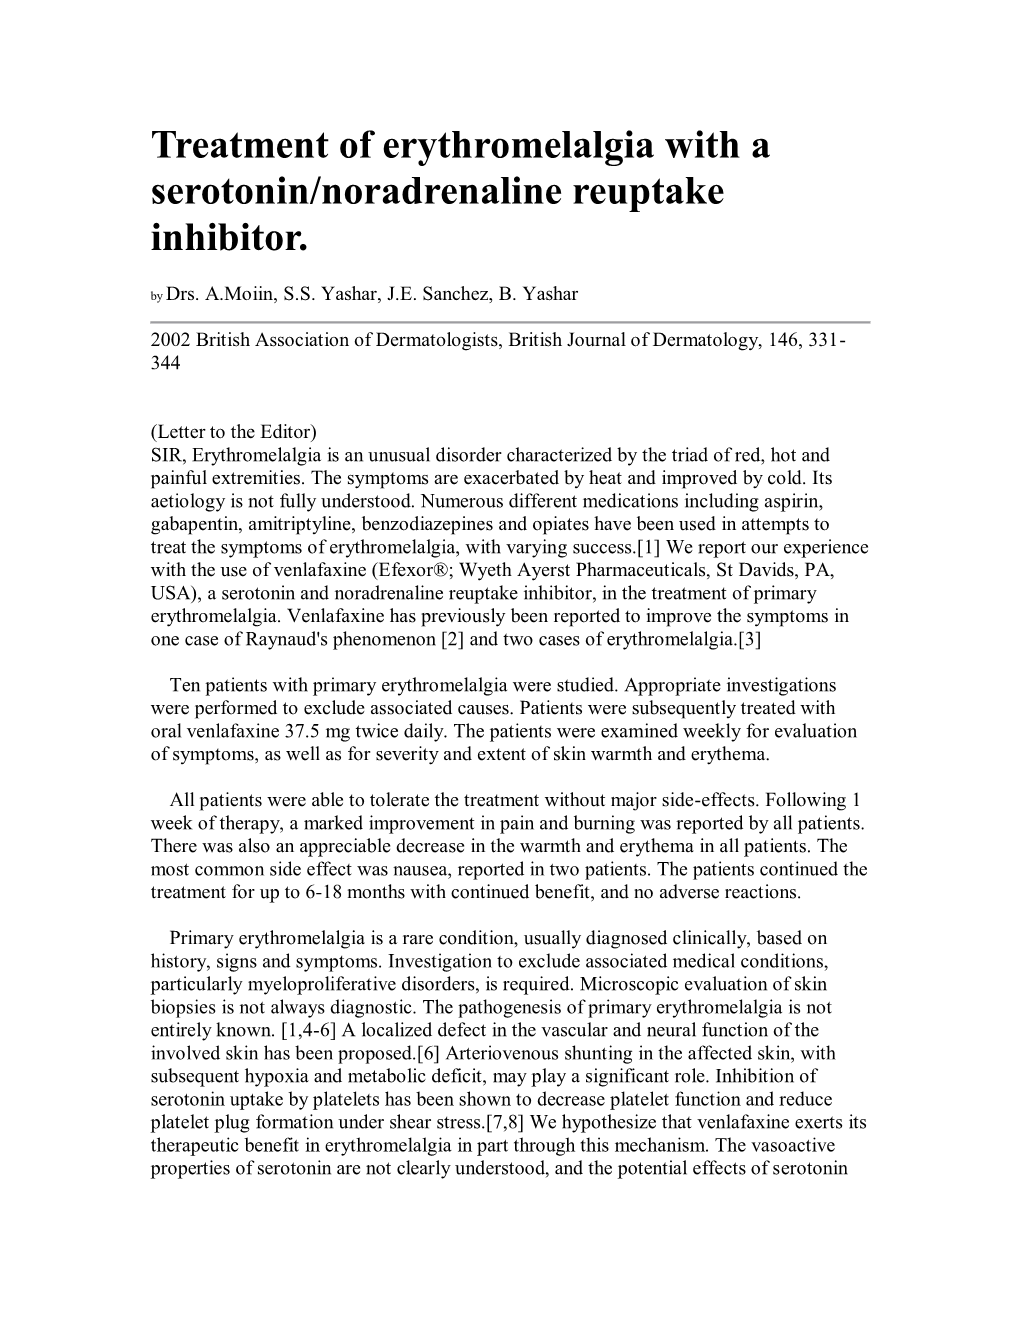 Treatment of Erythromelalgia with a Serotonin/Noradrenaline Reuptake Inhibitor